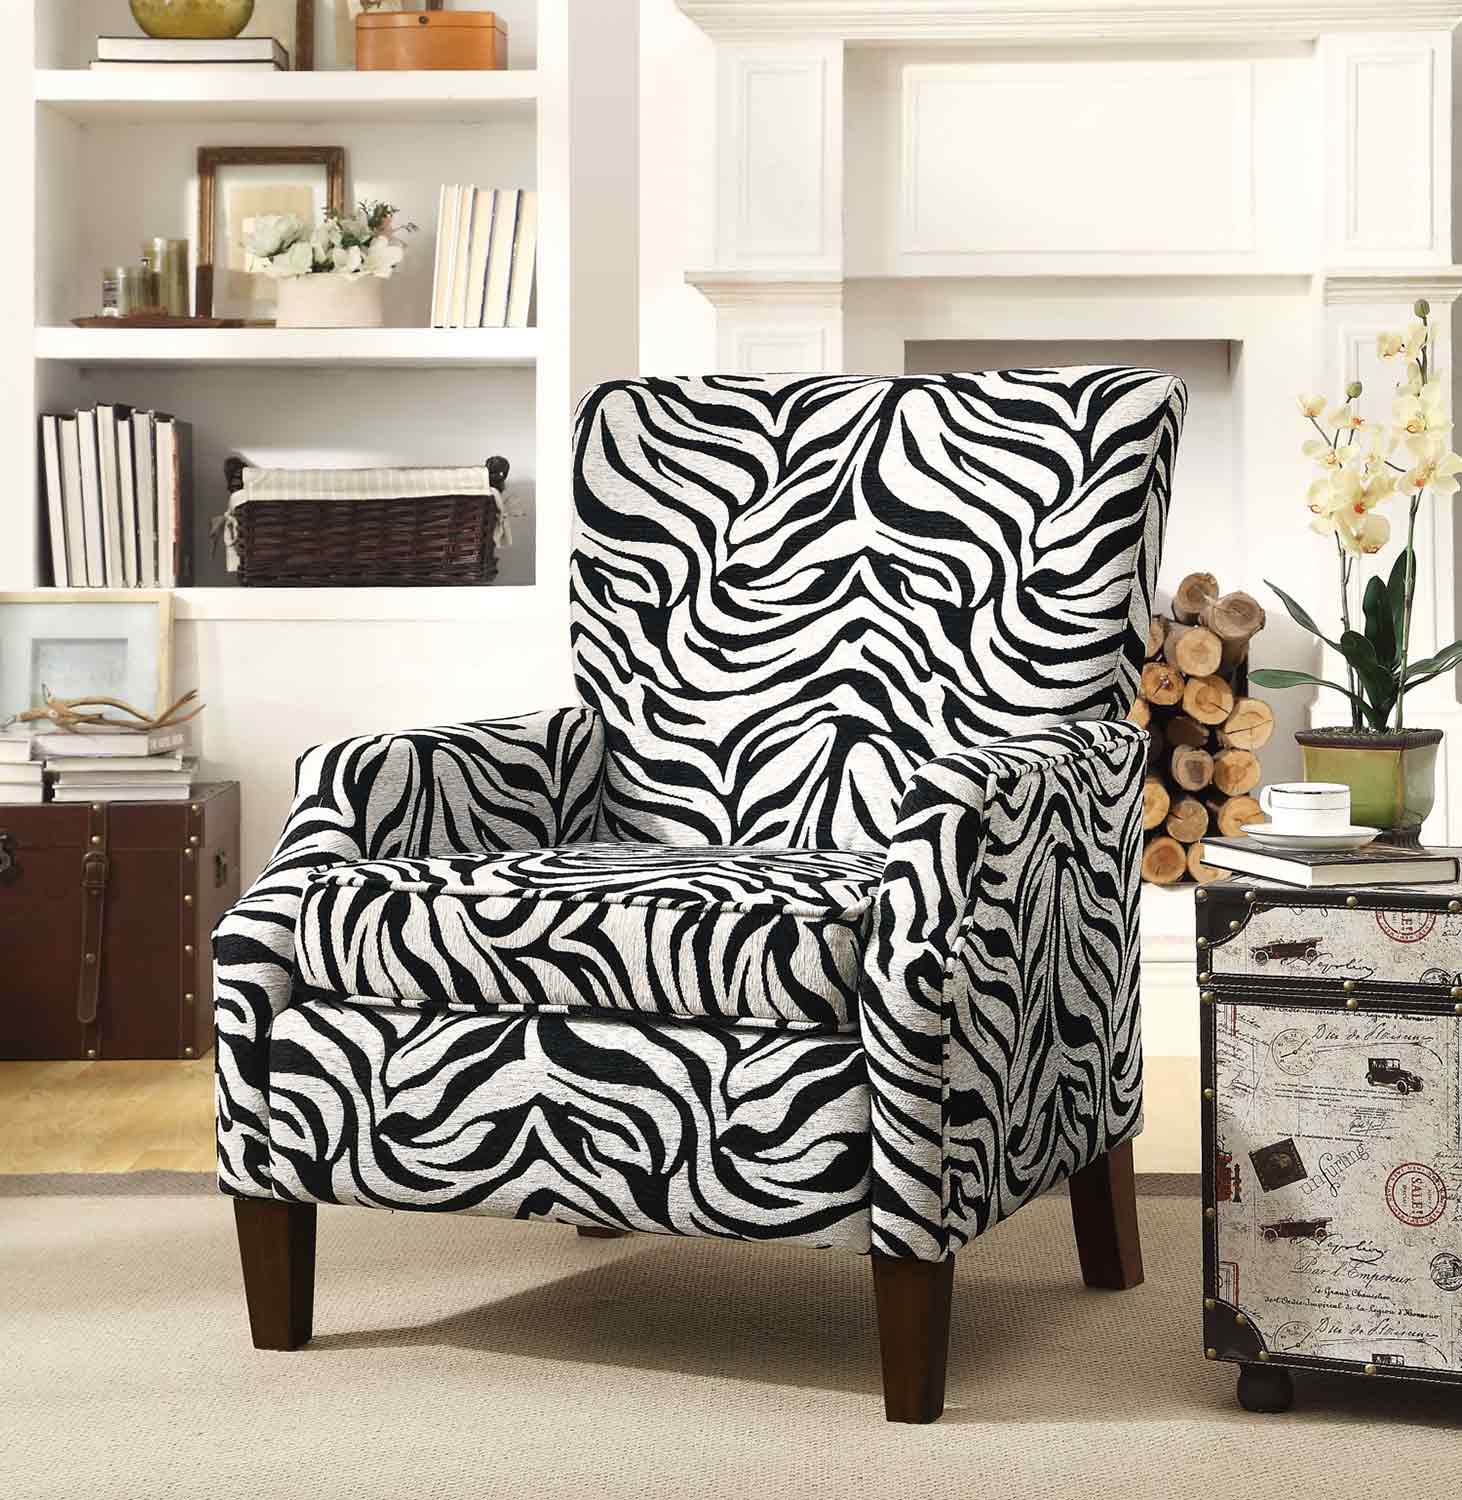 Coaster 902135 Accent Chair - Zebra Pattern